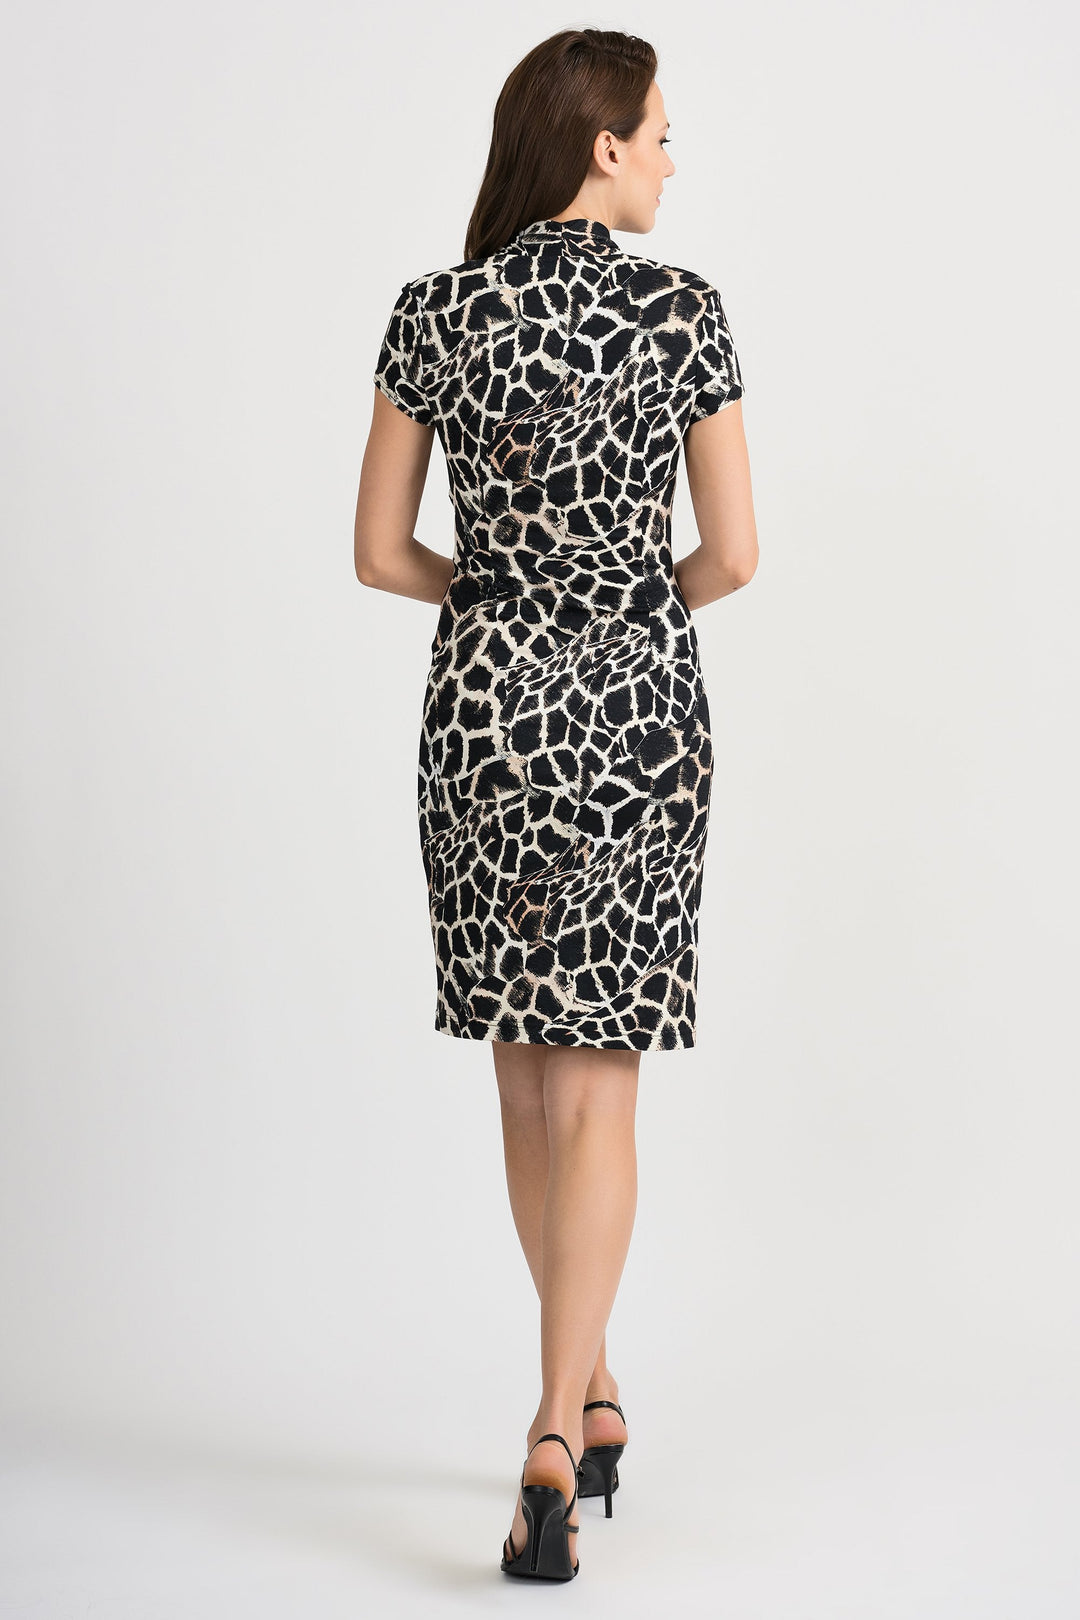 Joseph Ribkoff Dress Style 201368